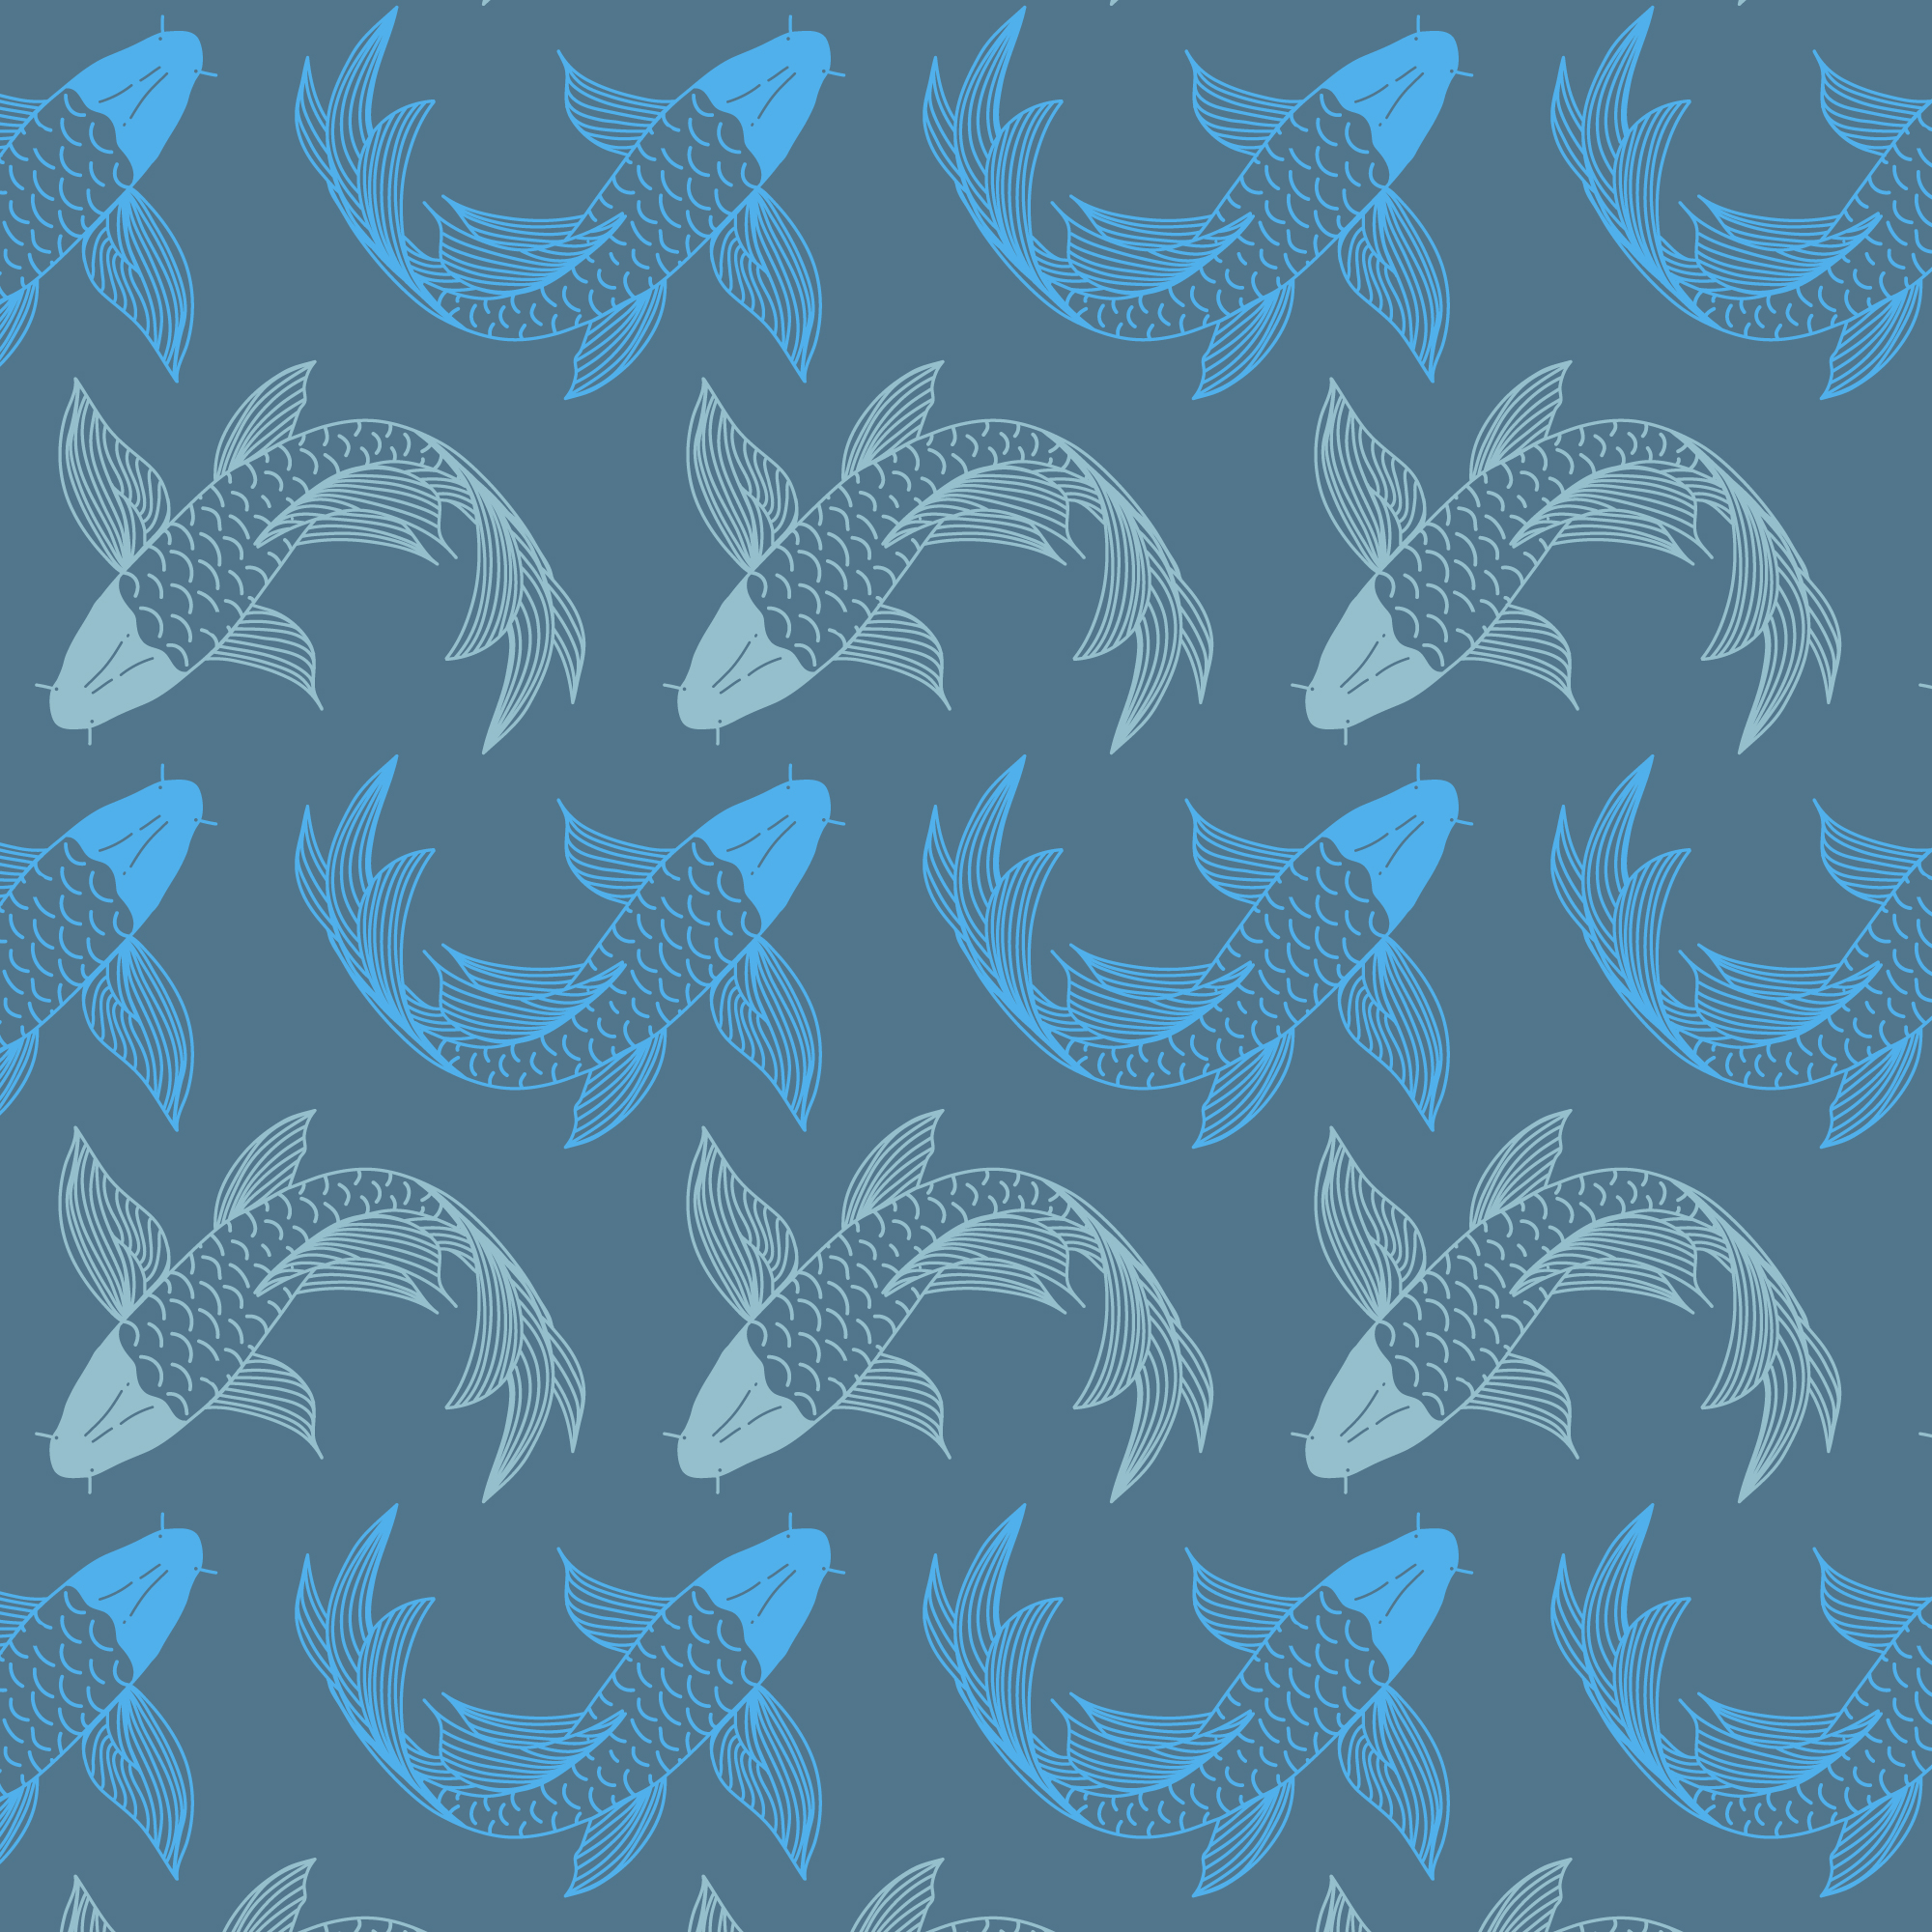 Hand drawn koi fish pattern background - Download Free ...